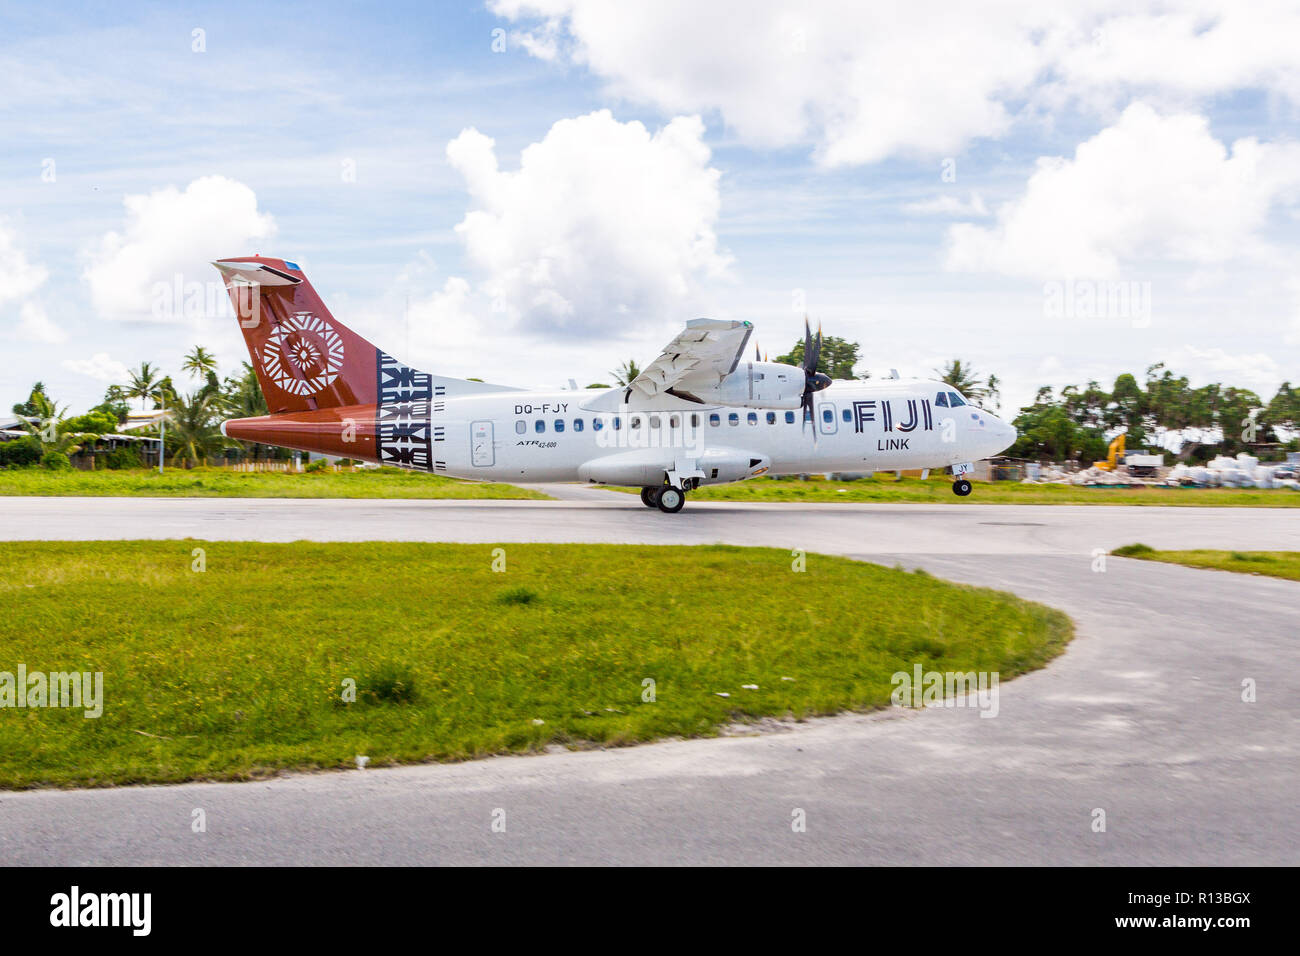 Fidschi Link ATR 42-600 Flugzeug Abflug von Tuvalu International Airport. Funafuti Atoll, Tuvalu, Polynesien, South Pacific Ocean, Ozeanien. Stockfoto